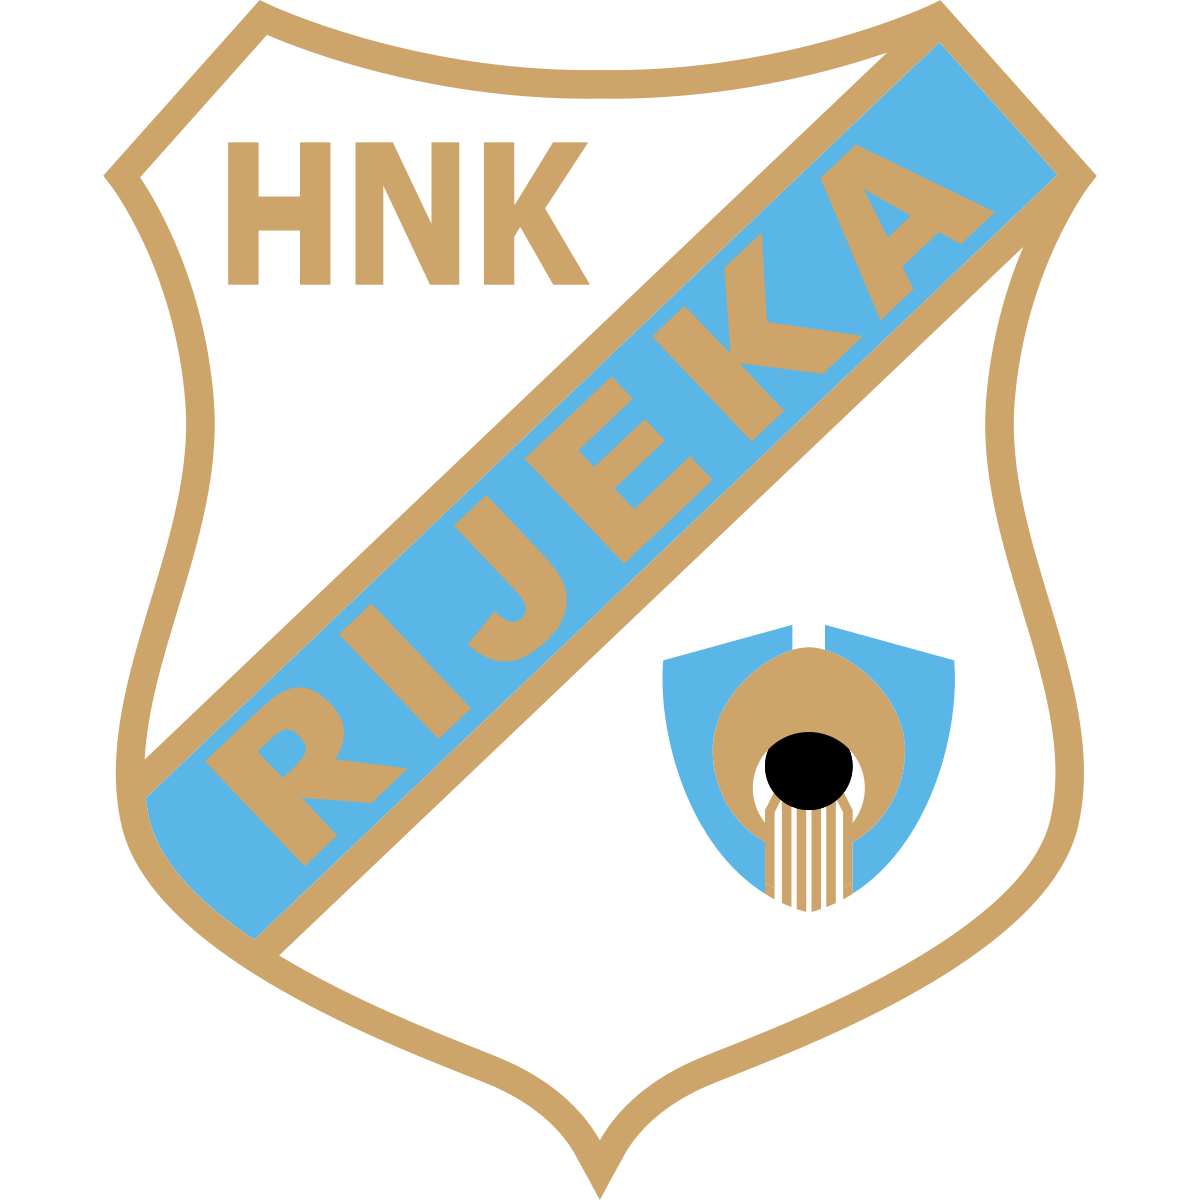 File:NK Dinamo - NK Rijeka 2008.jpg - Wikimedia Commons